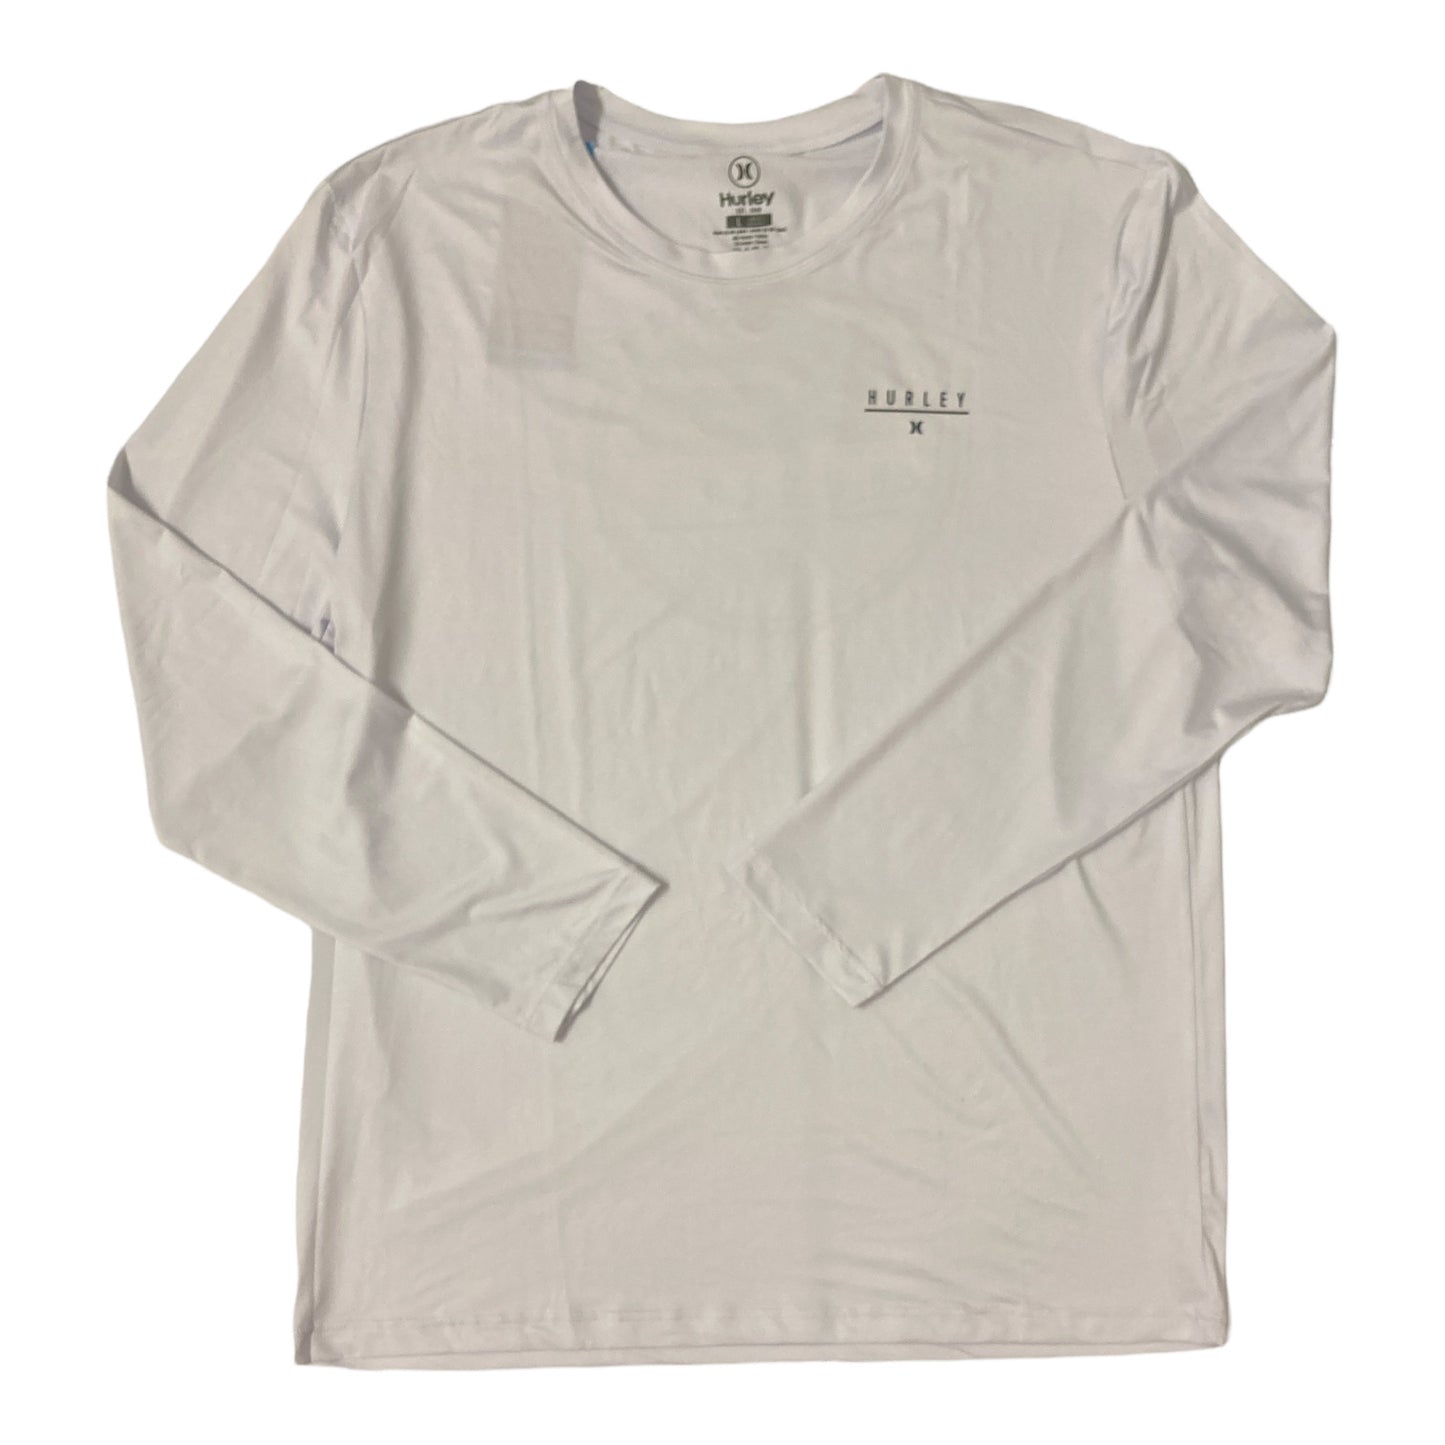 Hurley Men's Long Sleeve Moisture Wicking Graphic Rash Guard Shirt